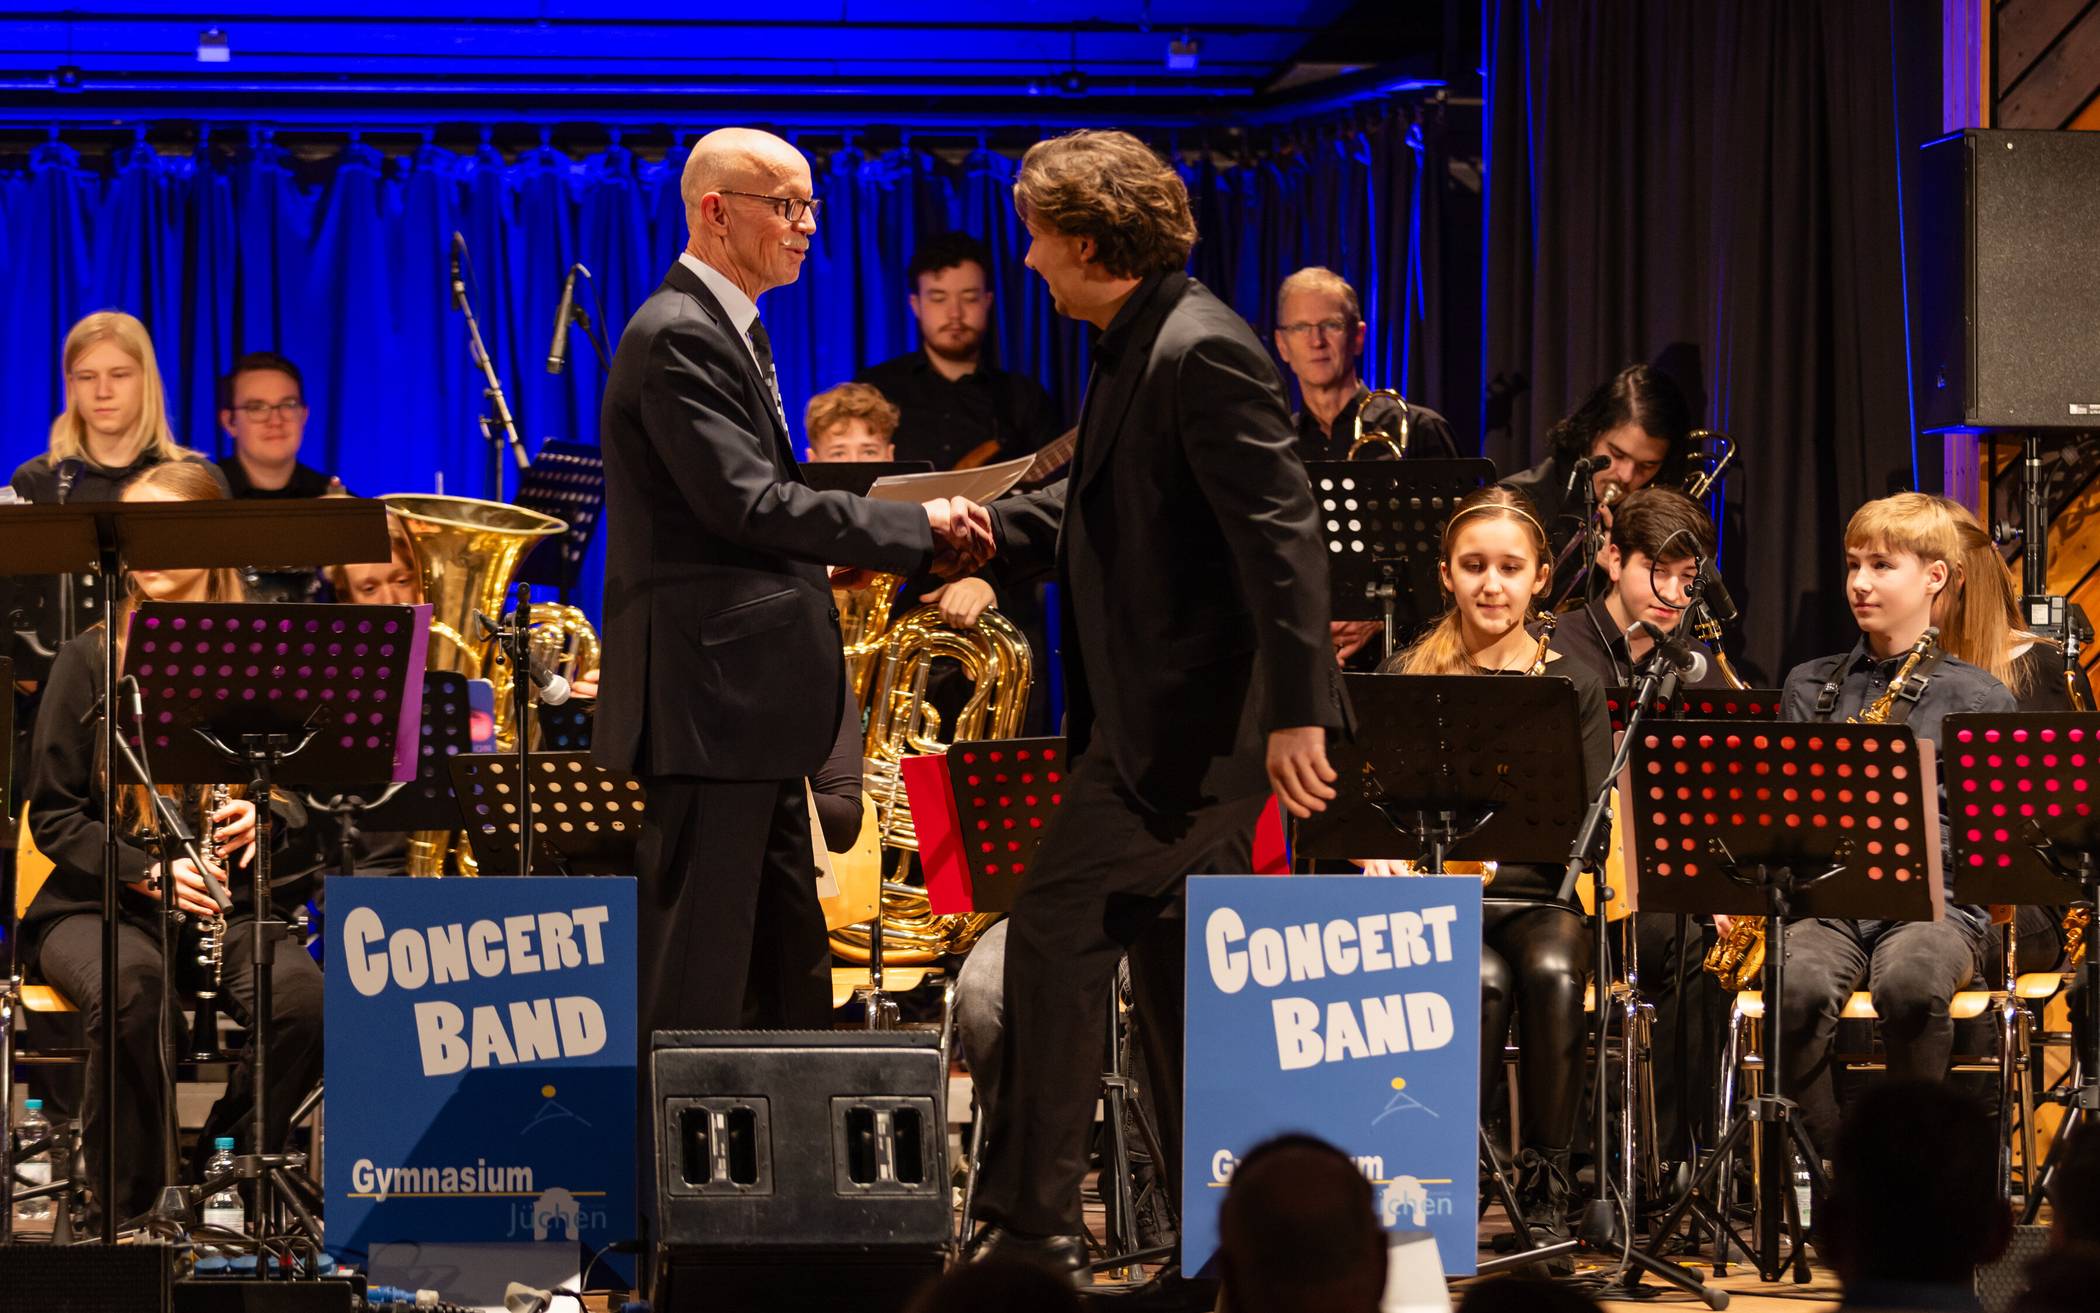 Bürgermeister Harald Zillikens (l.) begrüßte Simon Förtsch, den neuen Band Leader der „Concert Band“ des Gymnasiums Jüchen.